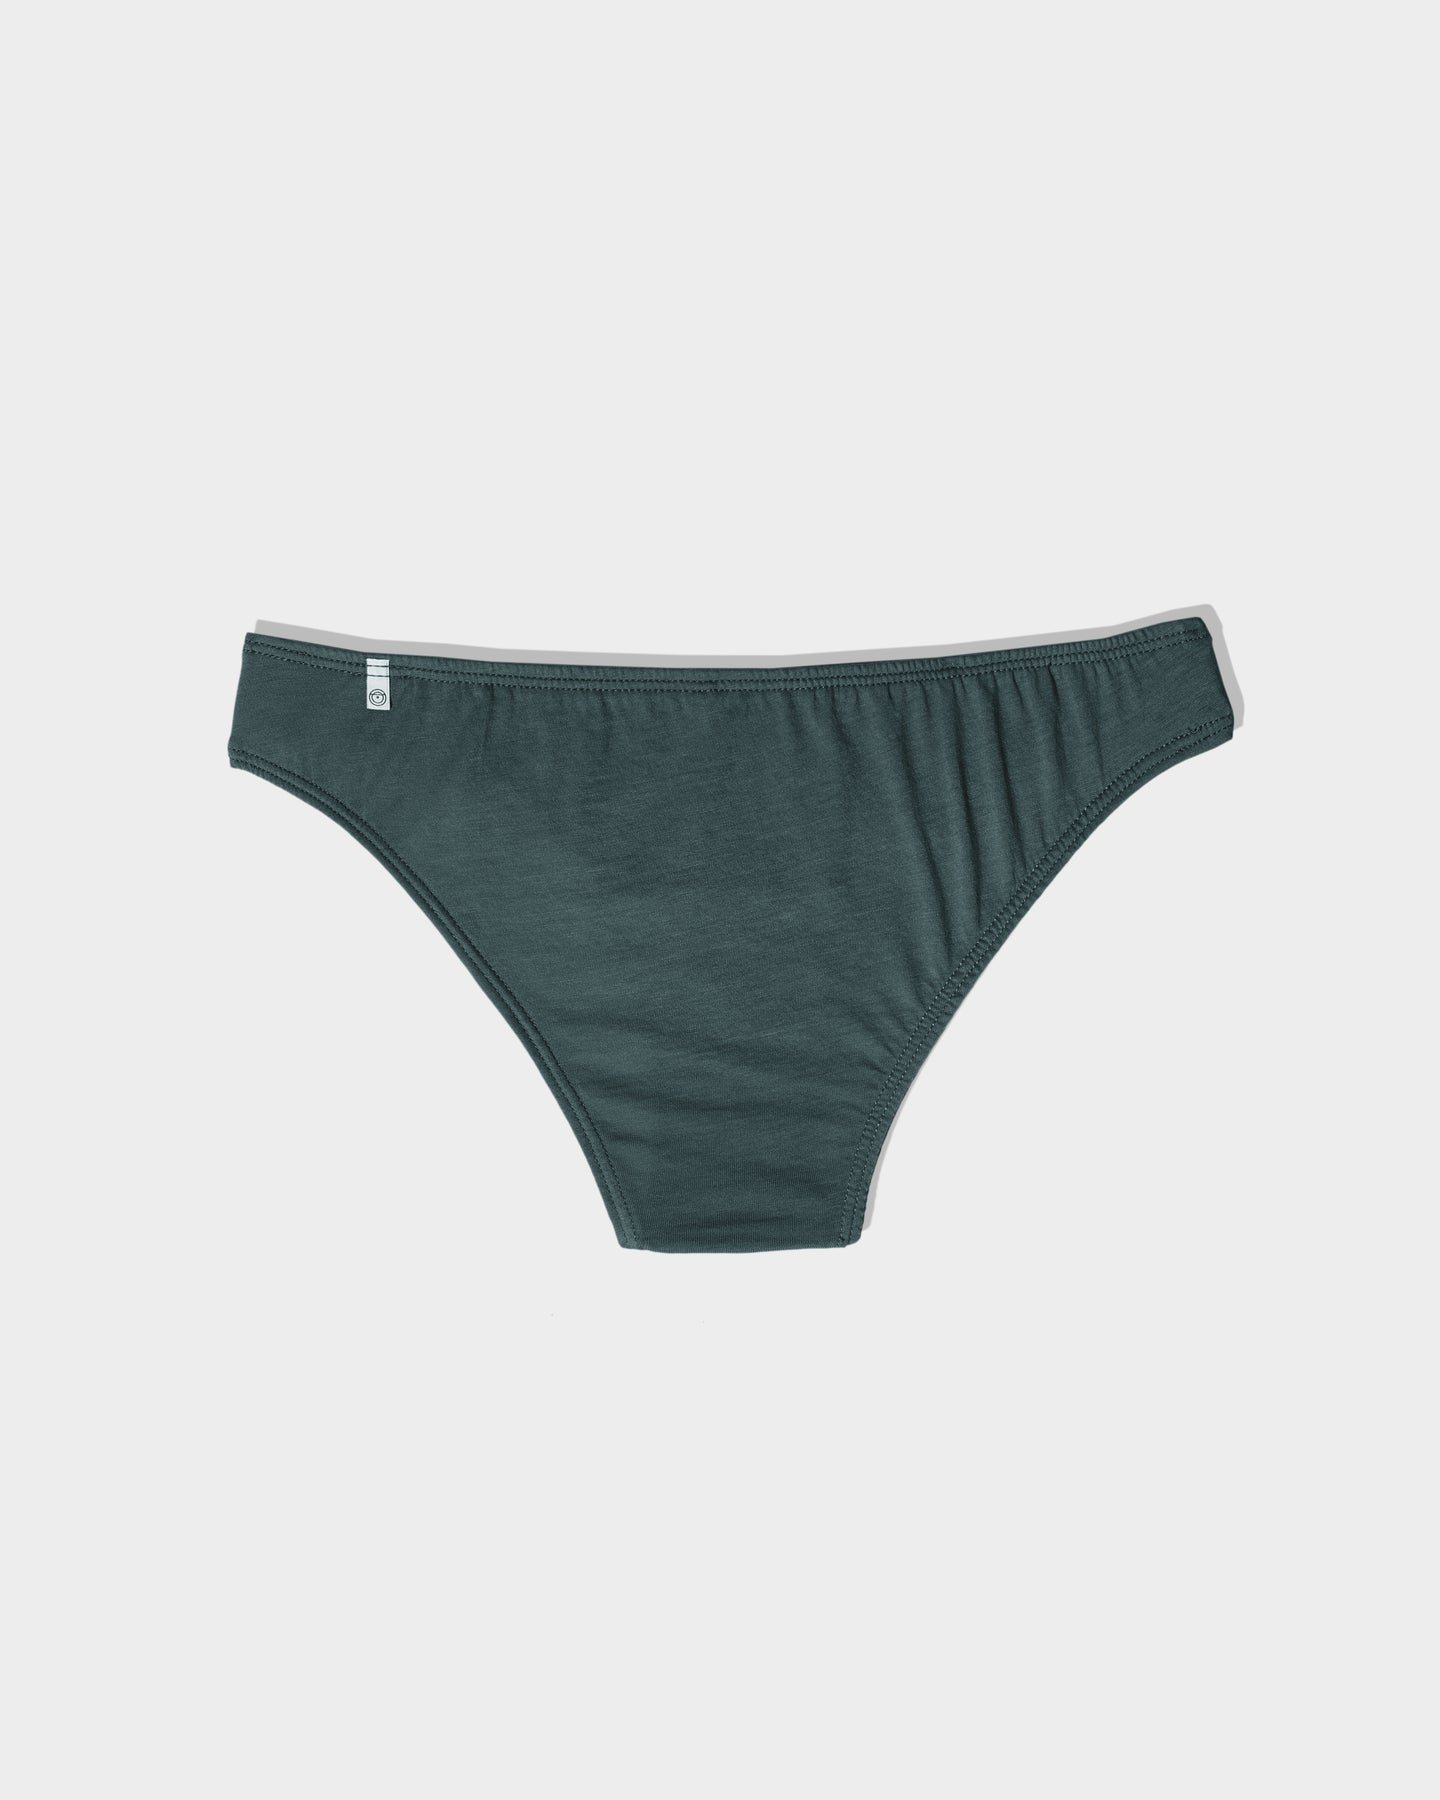 Thong Sexy Woman Panties 7 Underpants Panty Briefs (Color : B